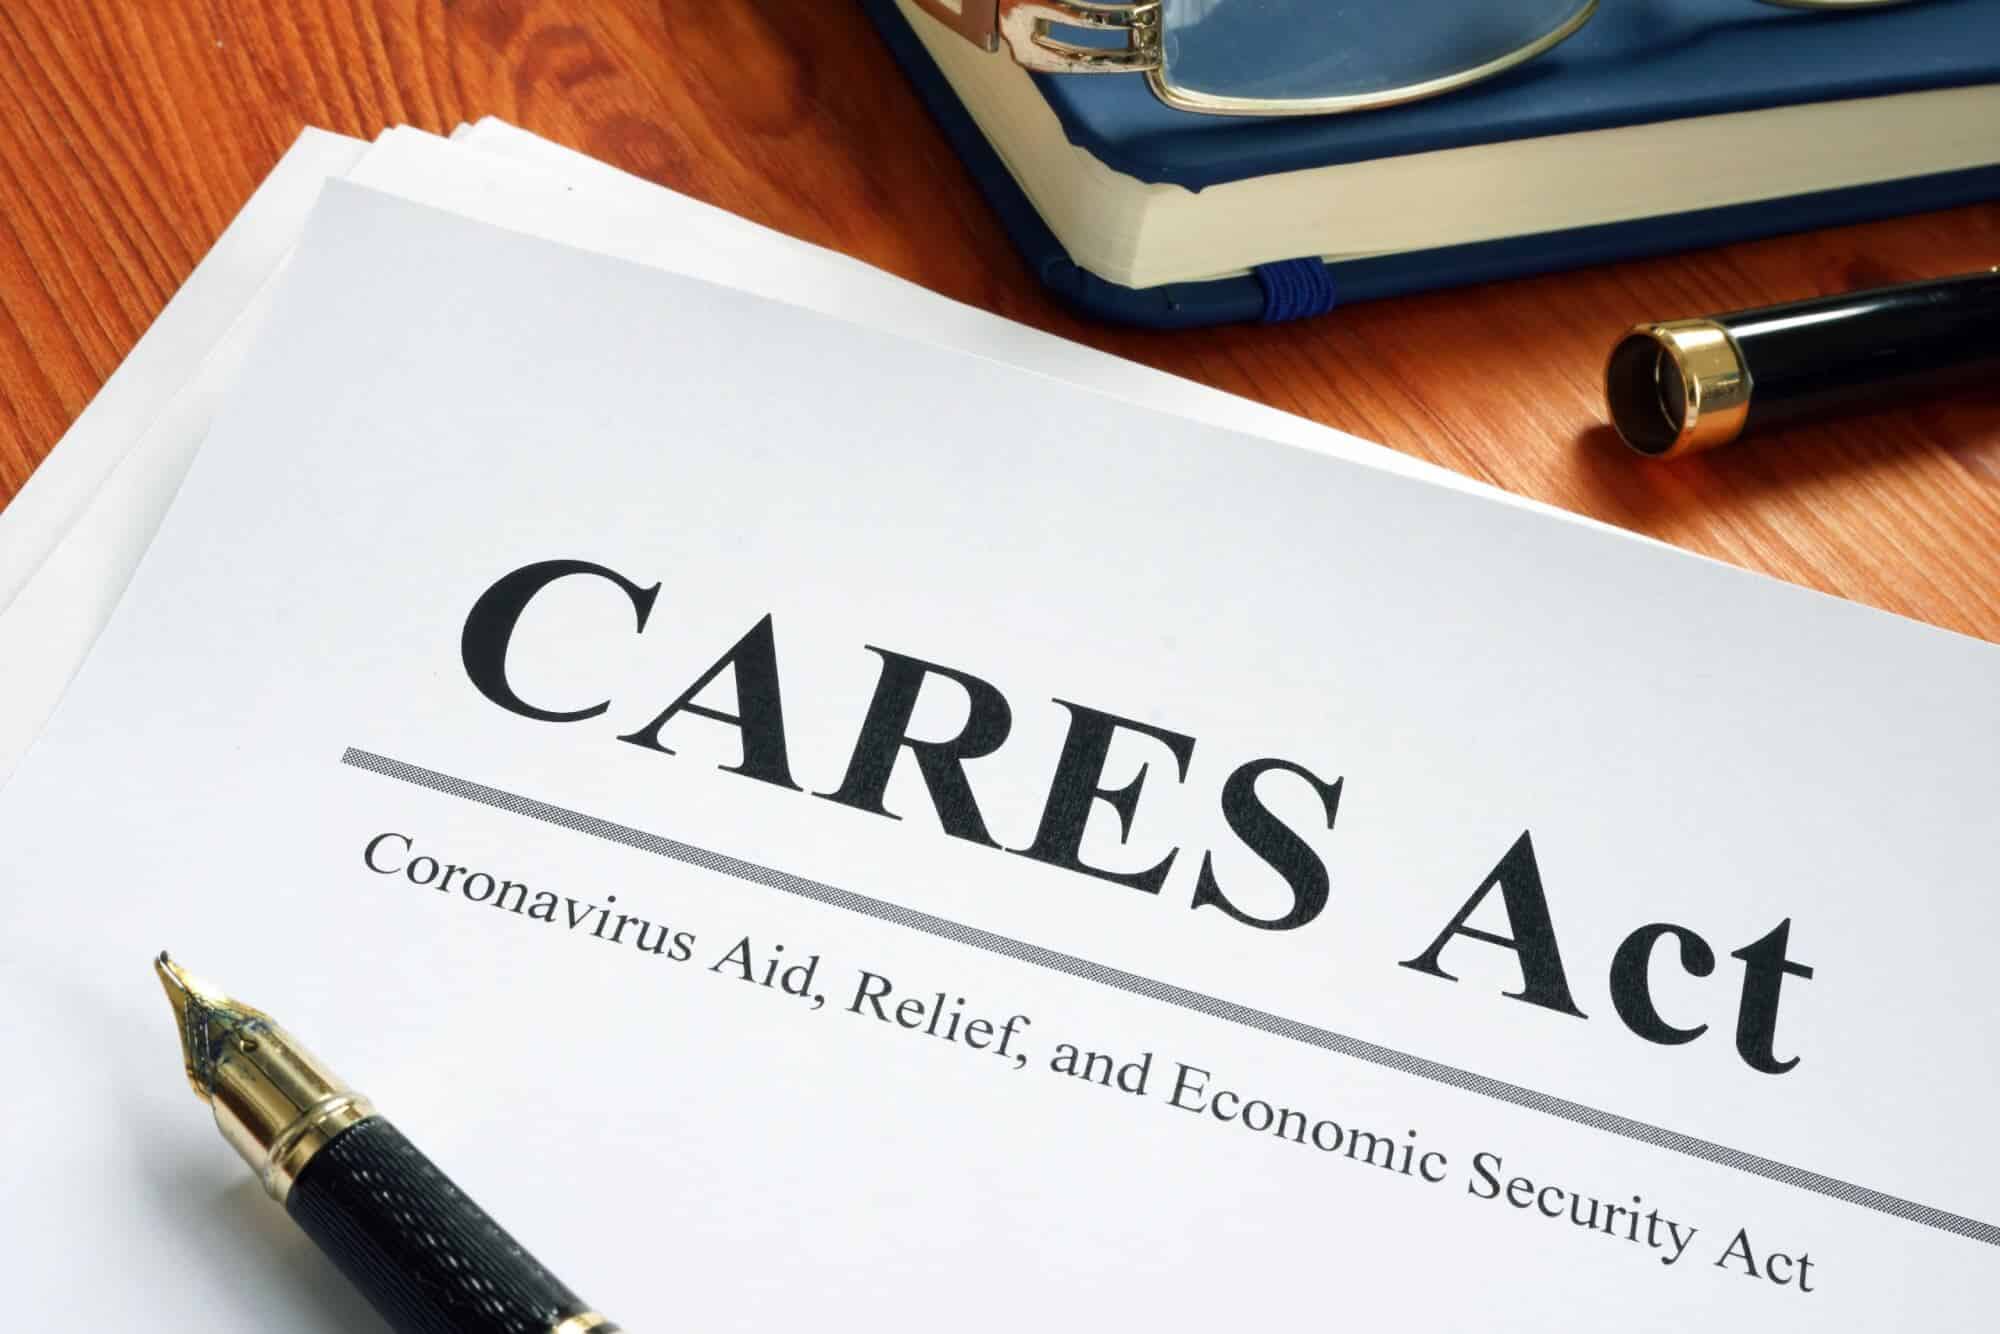 CARES Act - Coronavirus Aid, Relief, and Economic Security